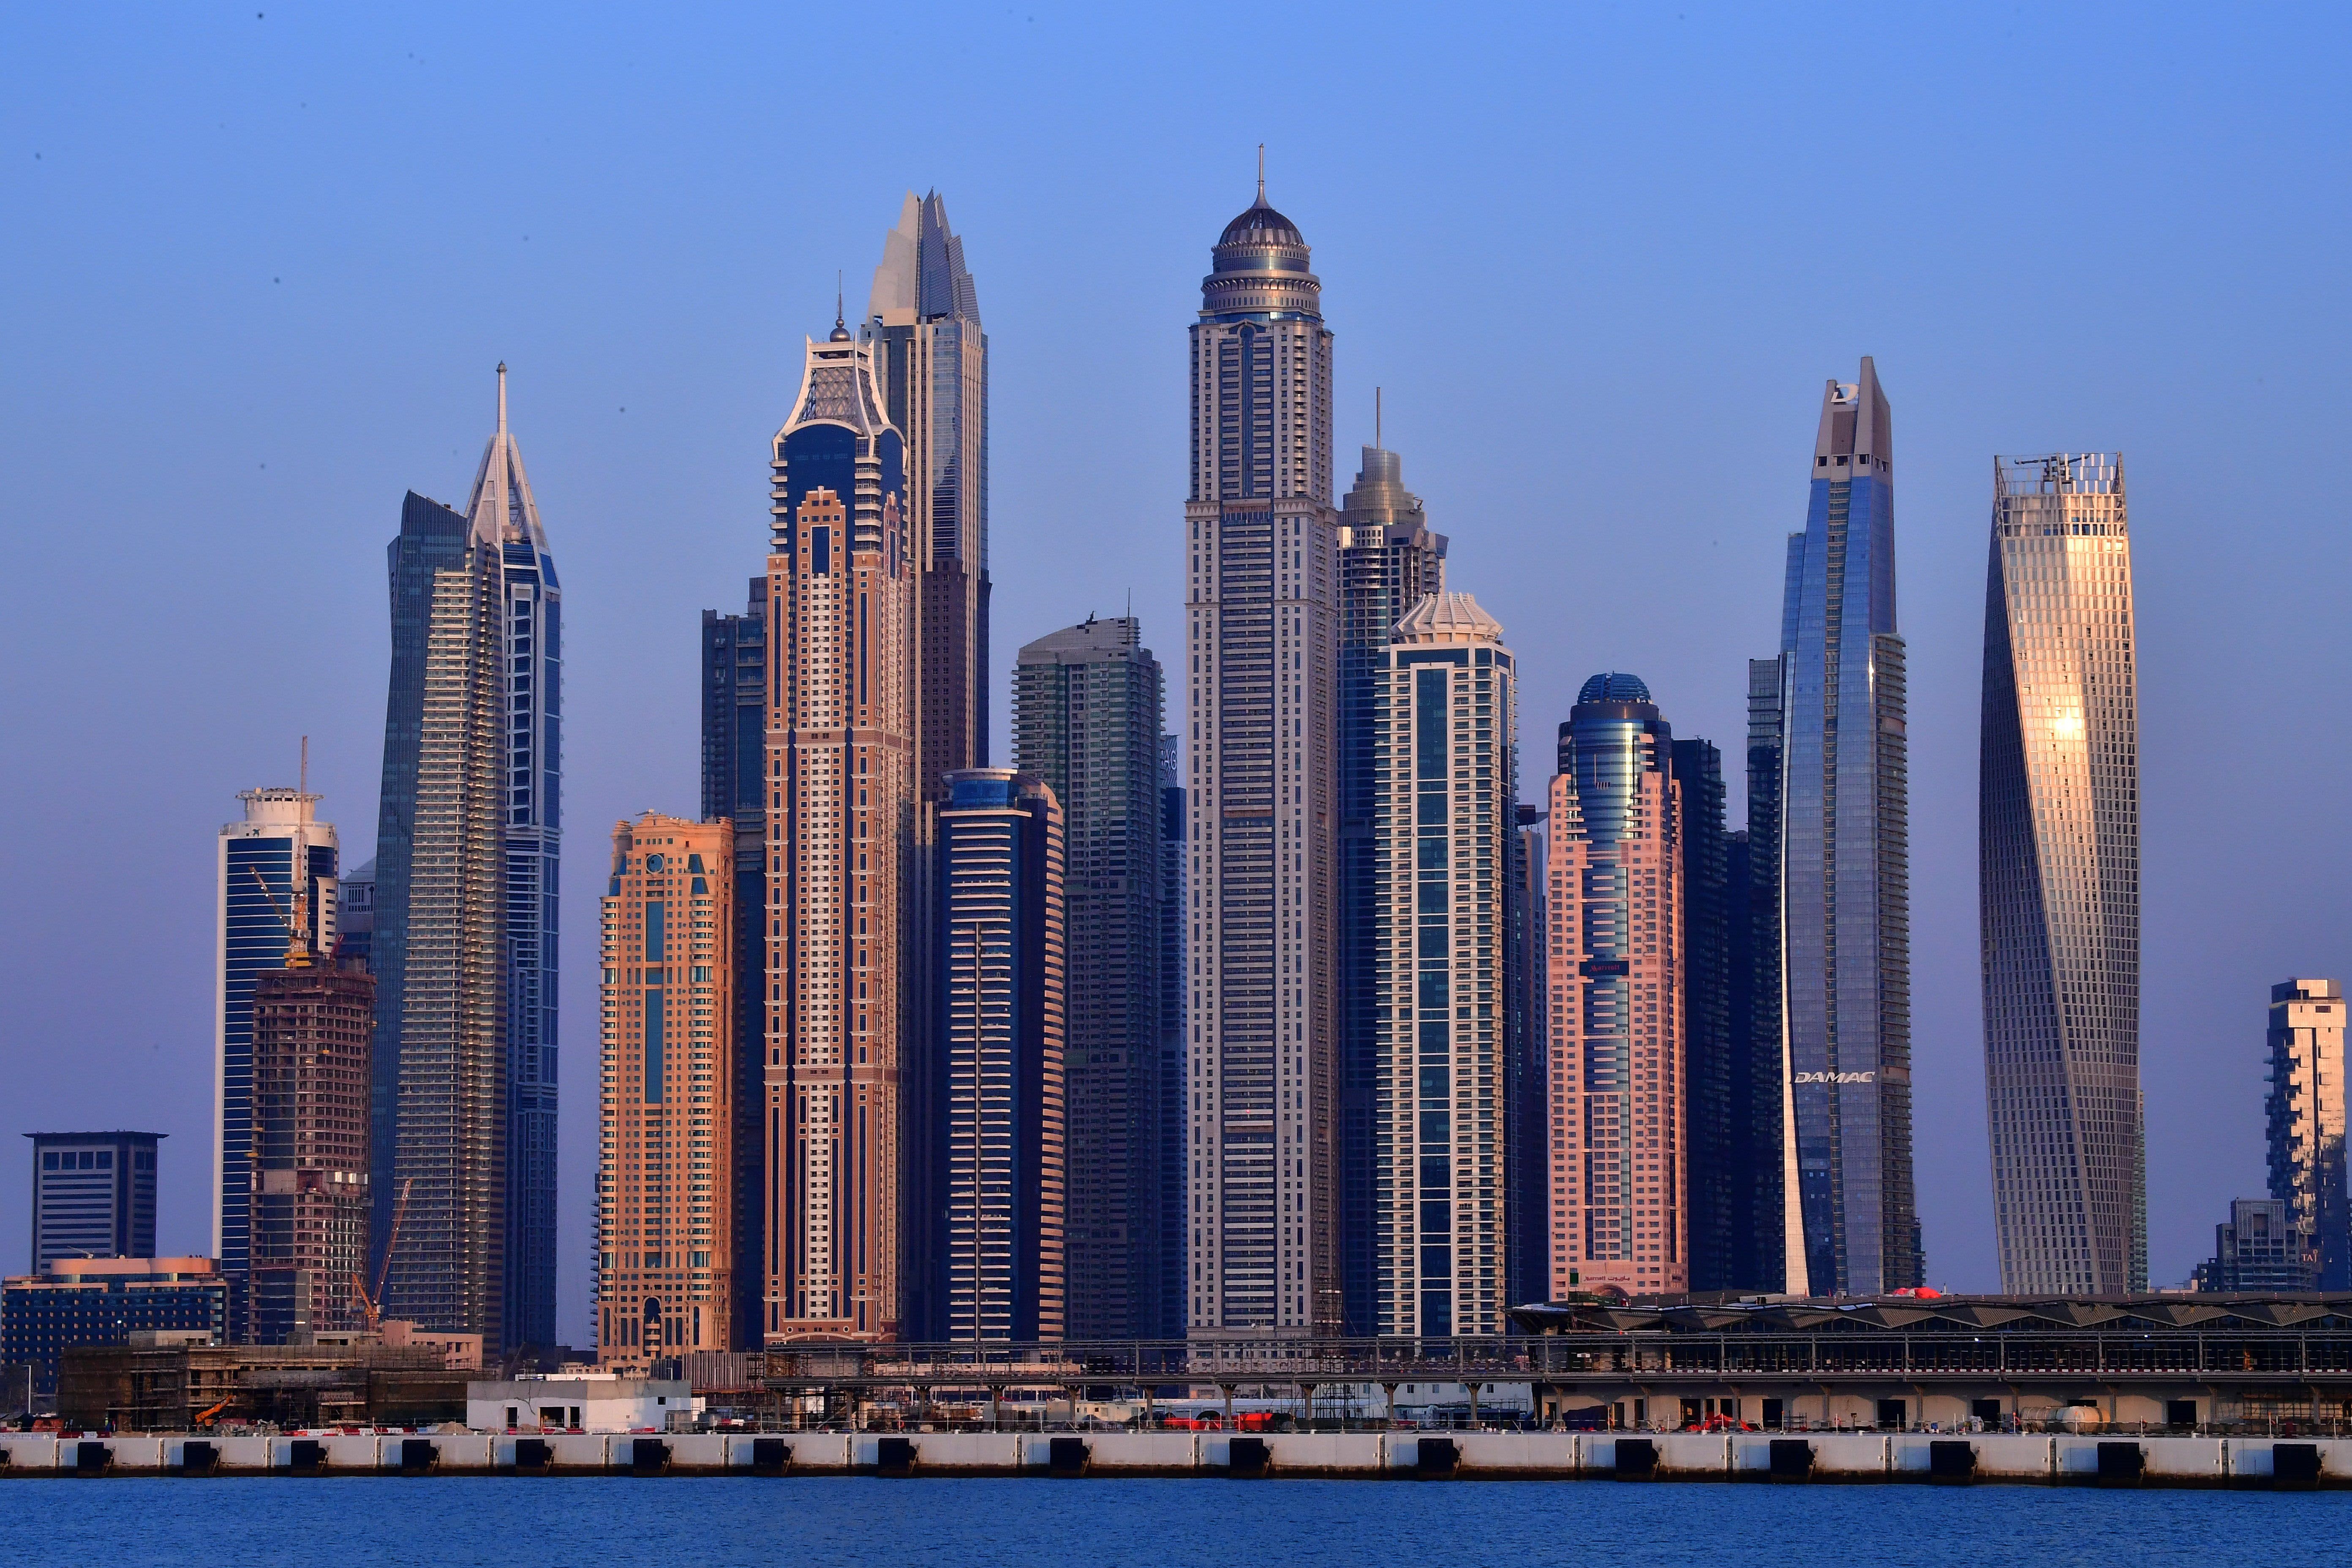 A delayed Expo 2020 Dubai raises questions about its future impact: Majid Al Futtaim CEO - CNBC